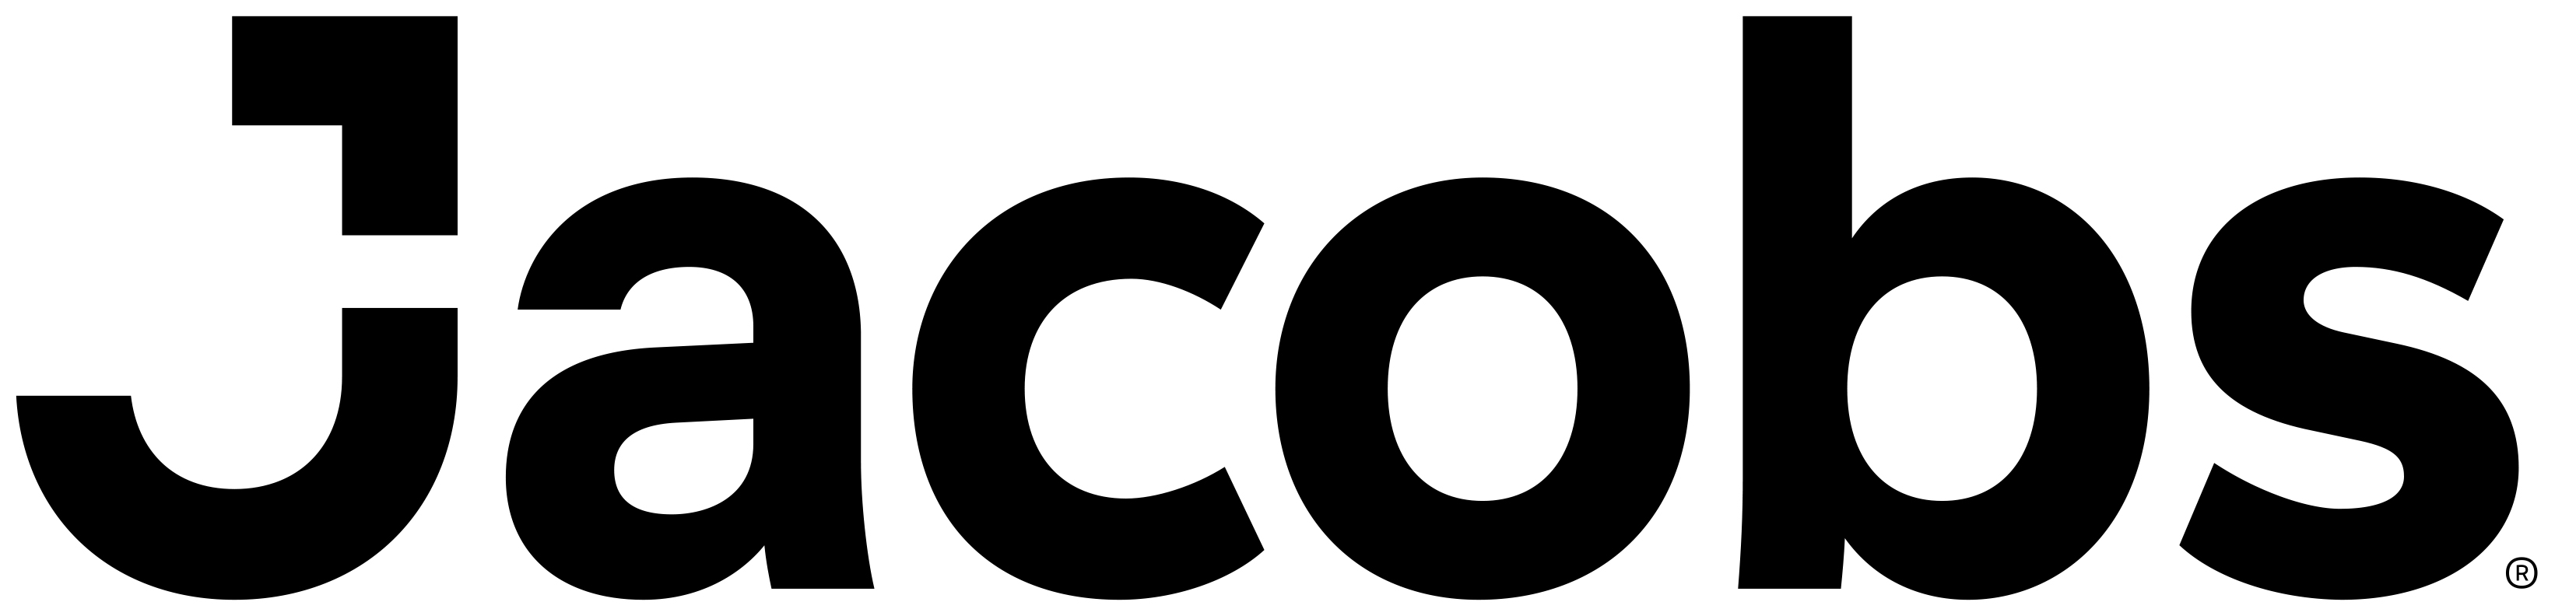 Jacobs logo rgb black (1)